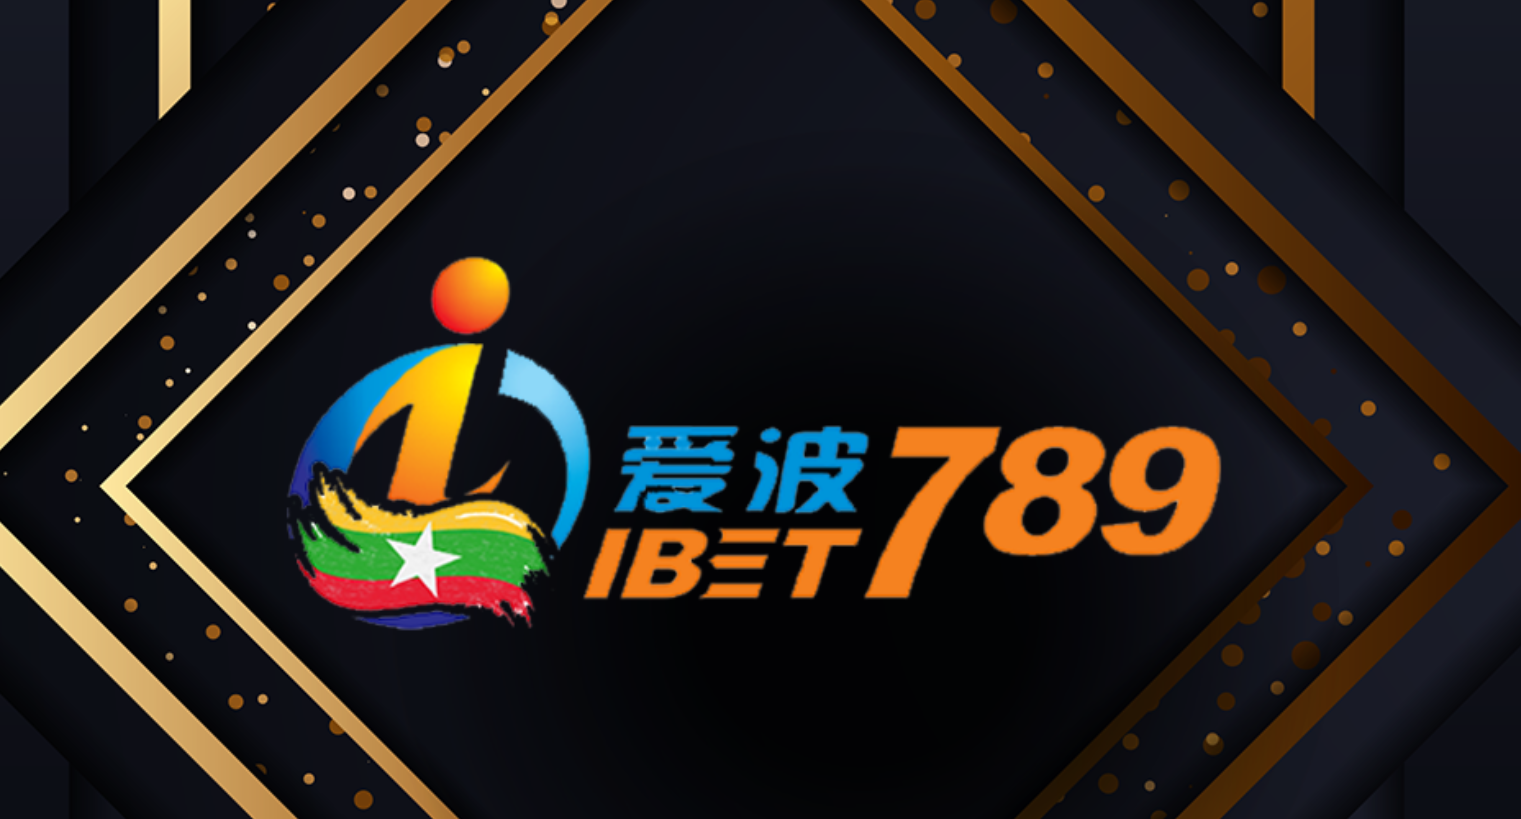 iBet789 sports betting platform